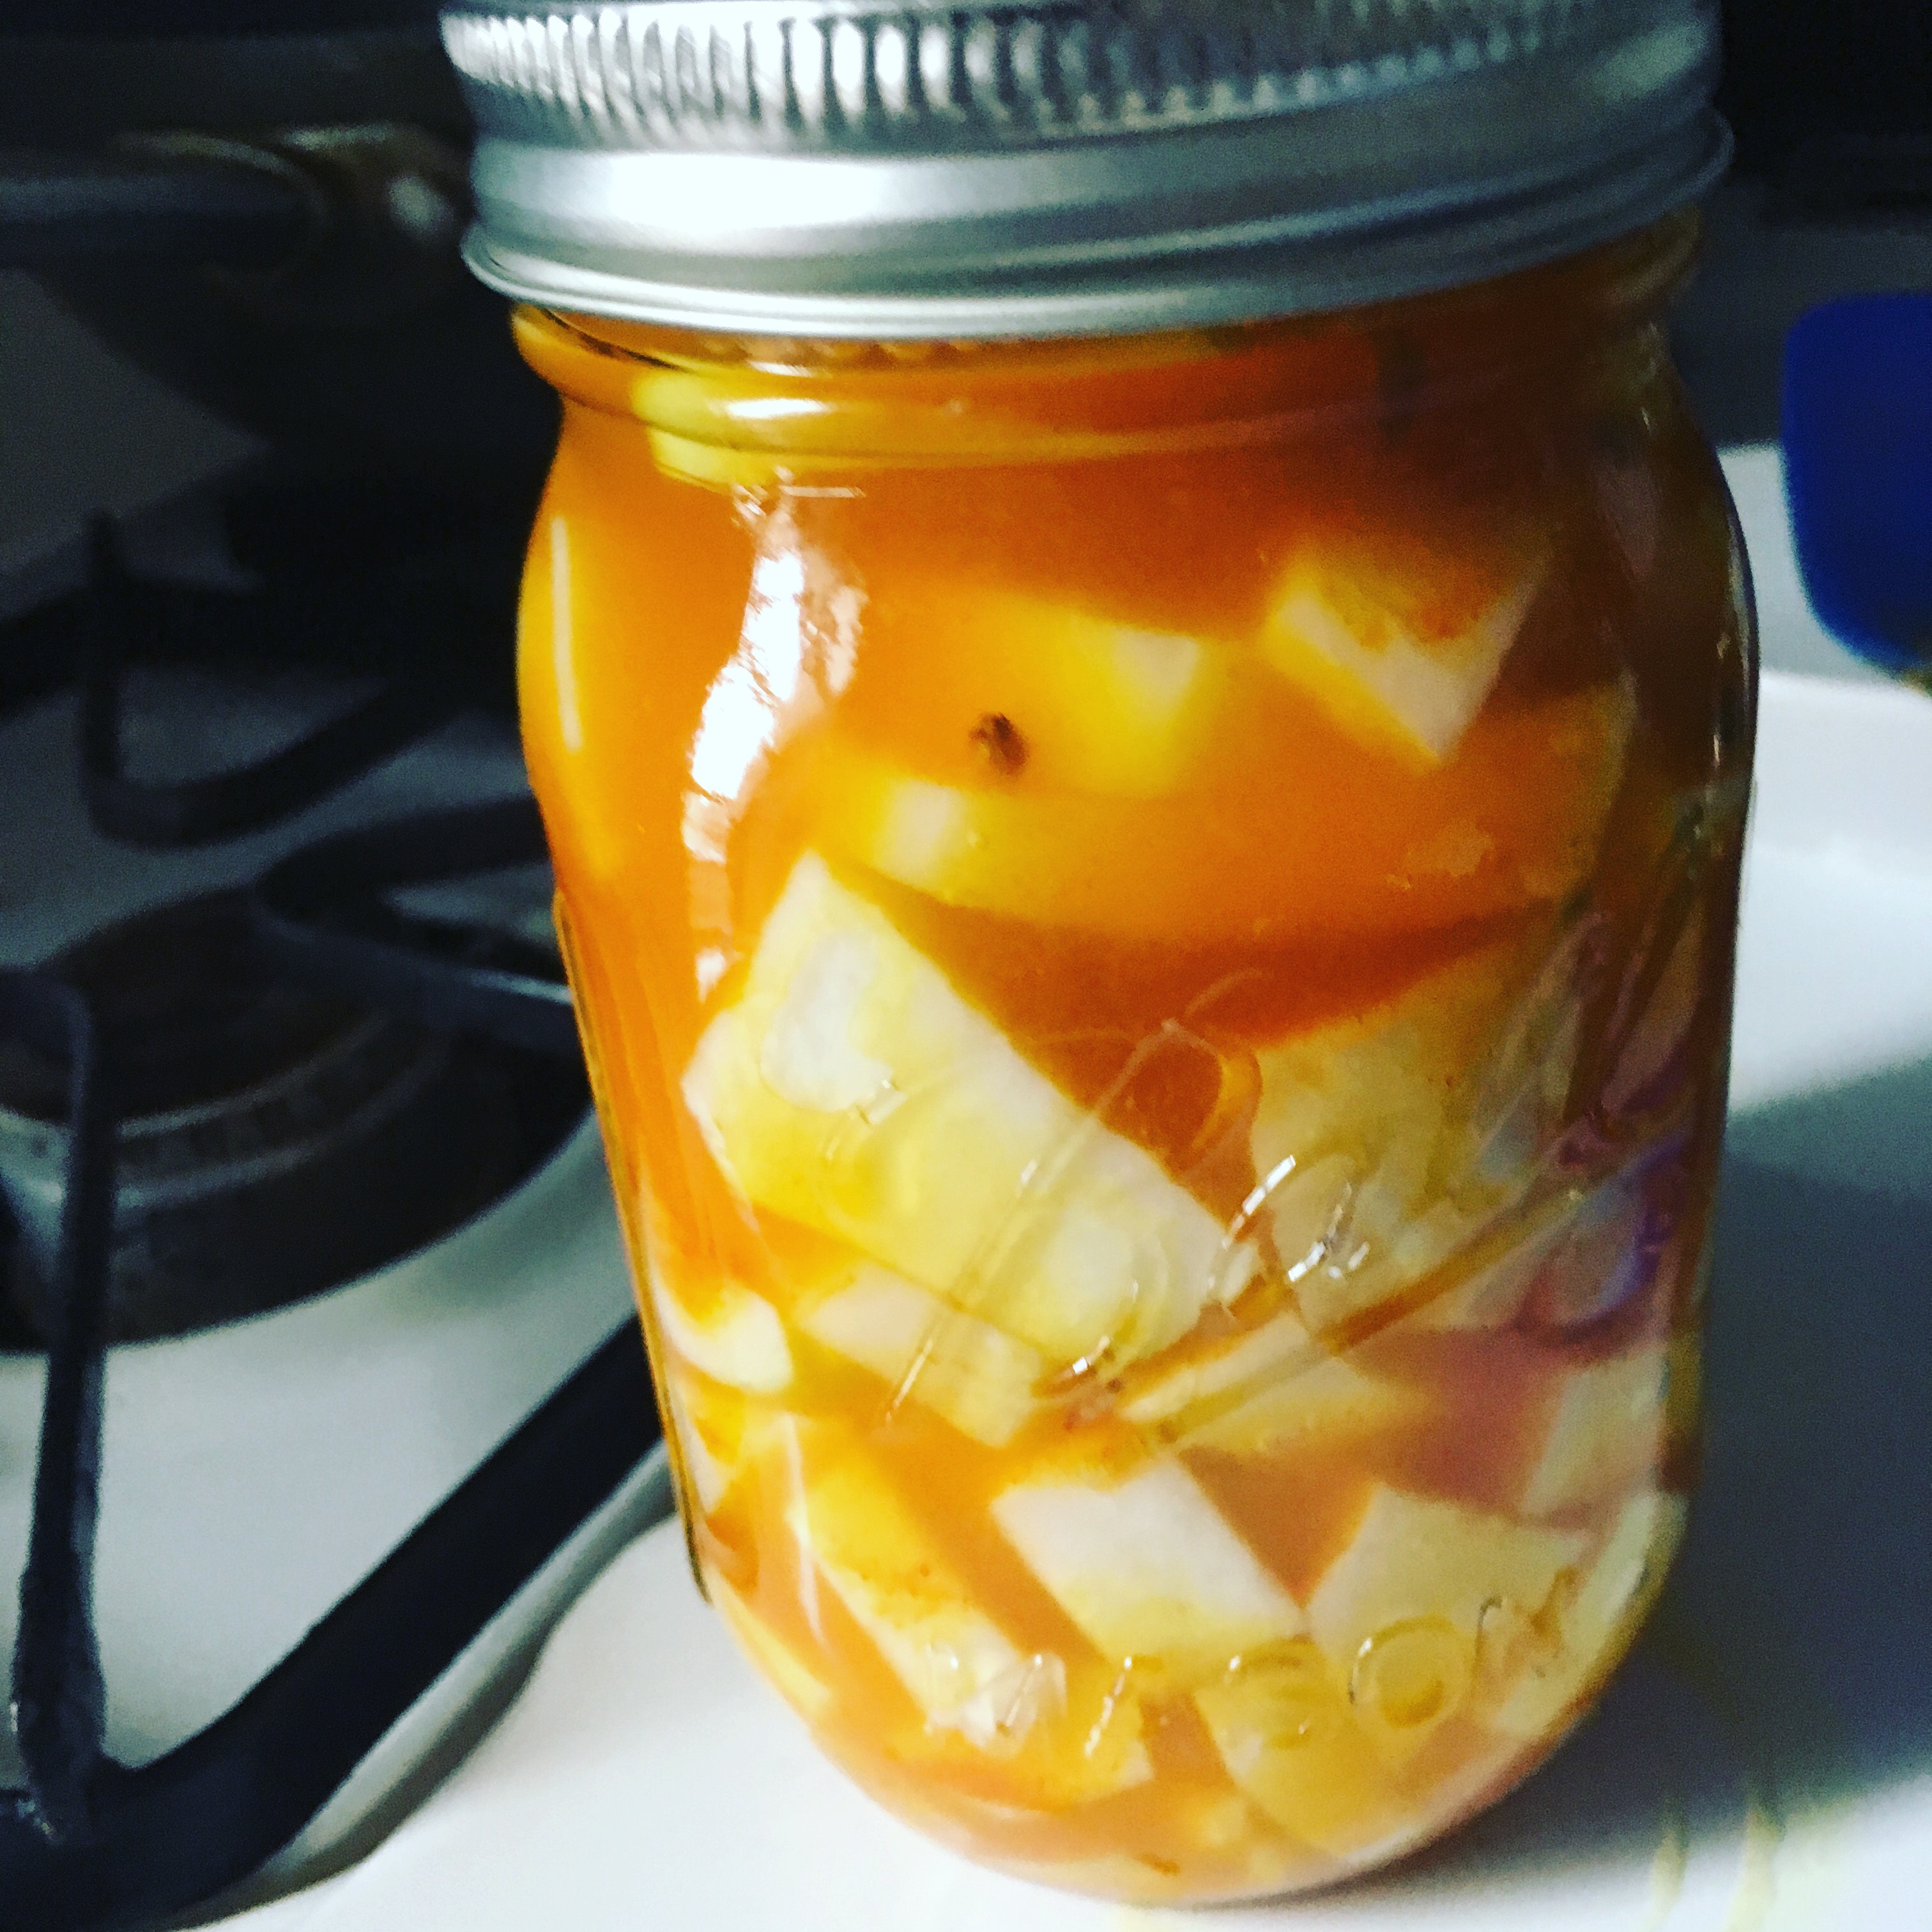 Pickled kohlrabi and turnip in an orange brine